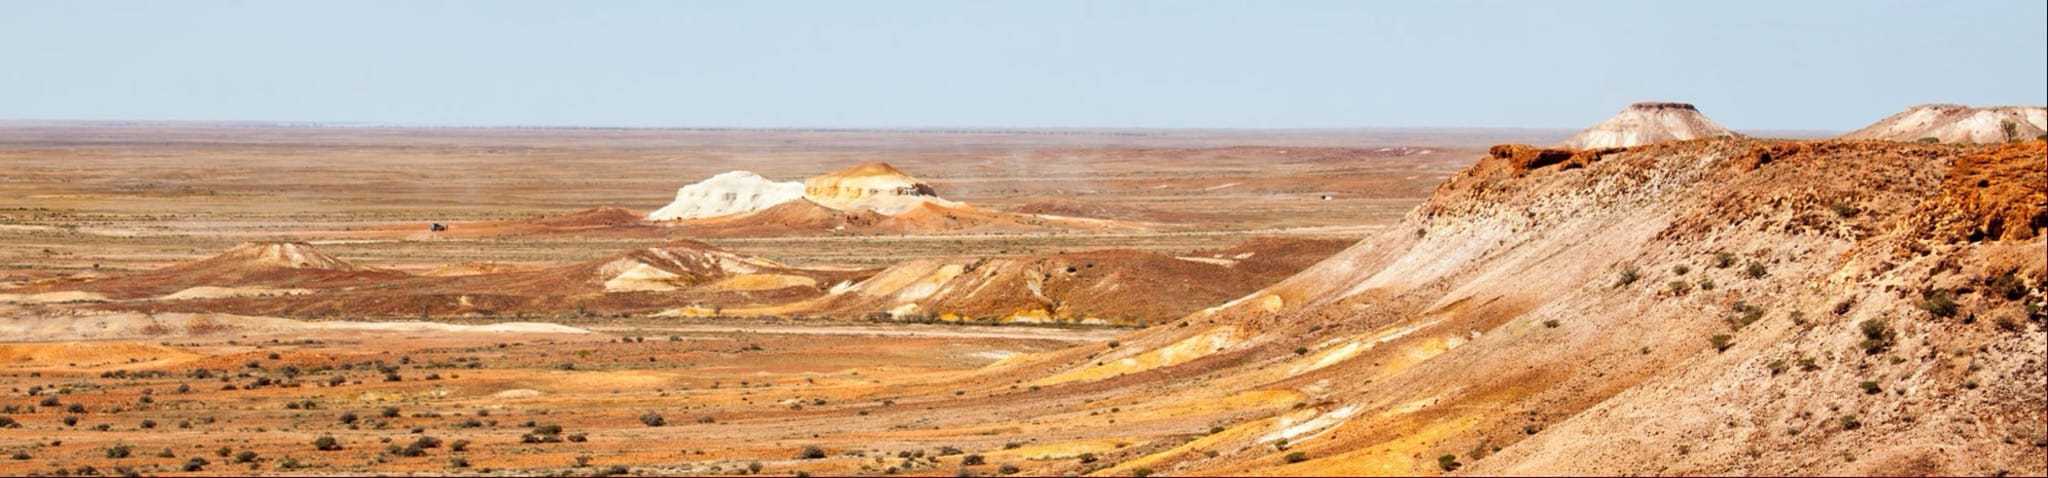 Opal Mining Town Coober Pedy South Australia